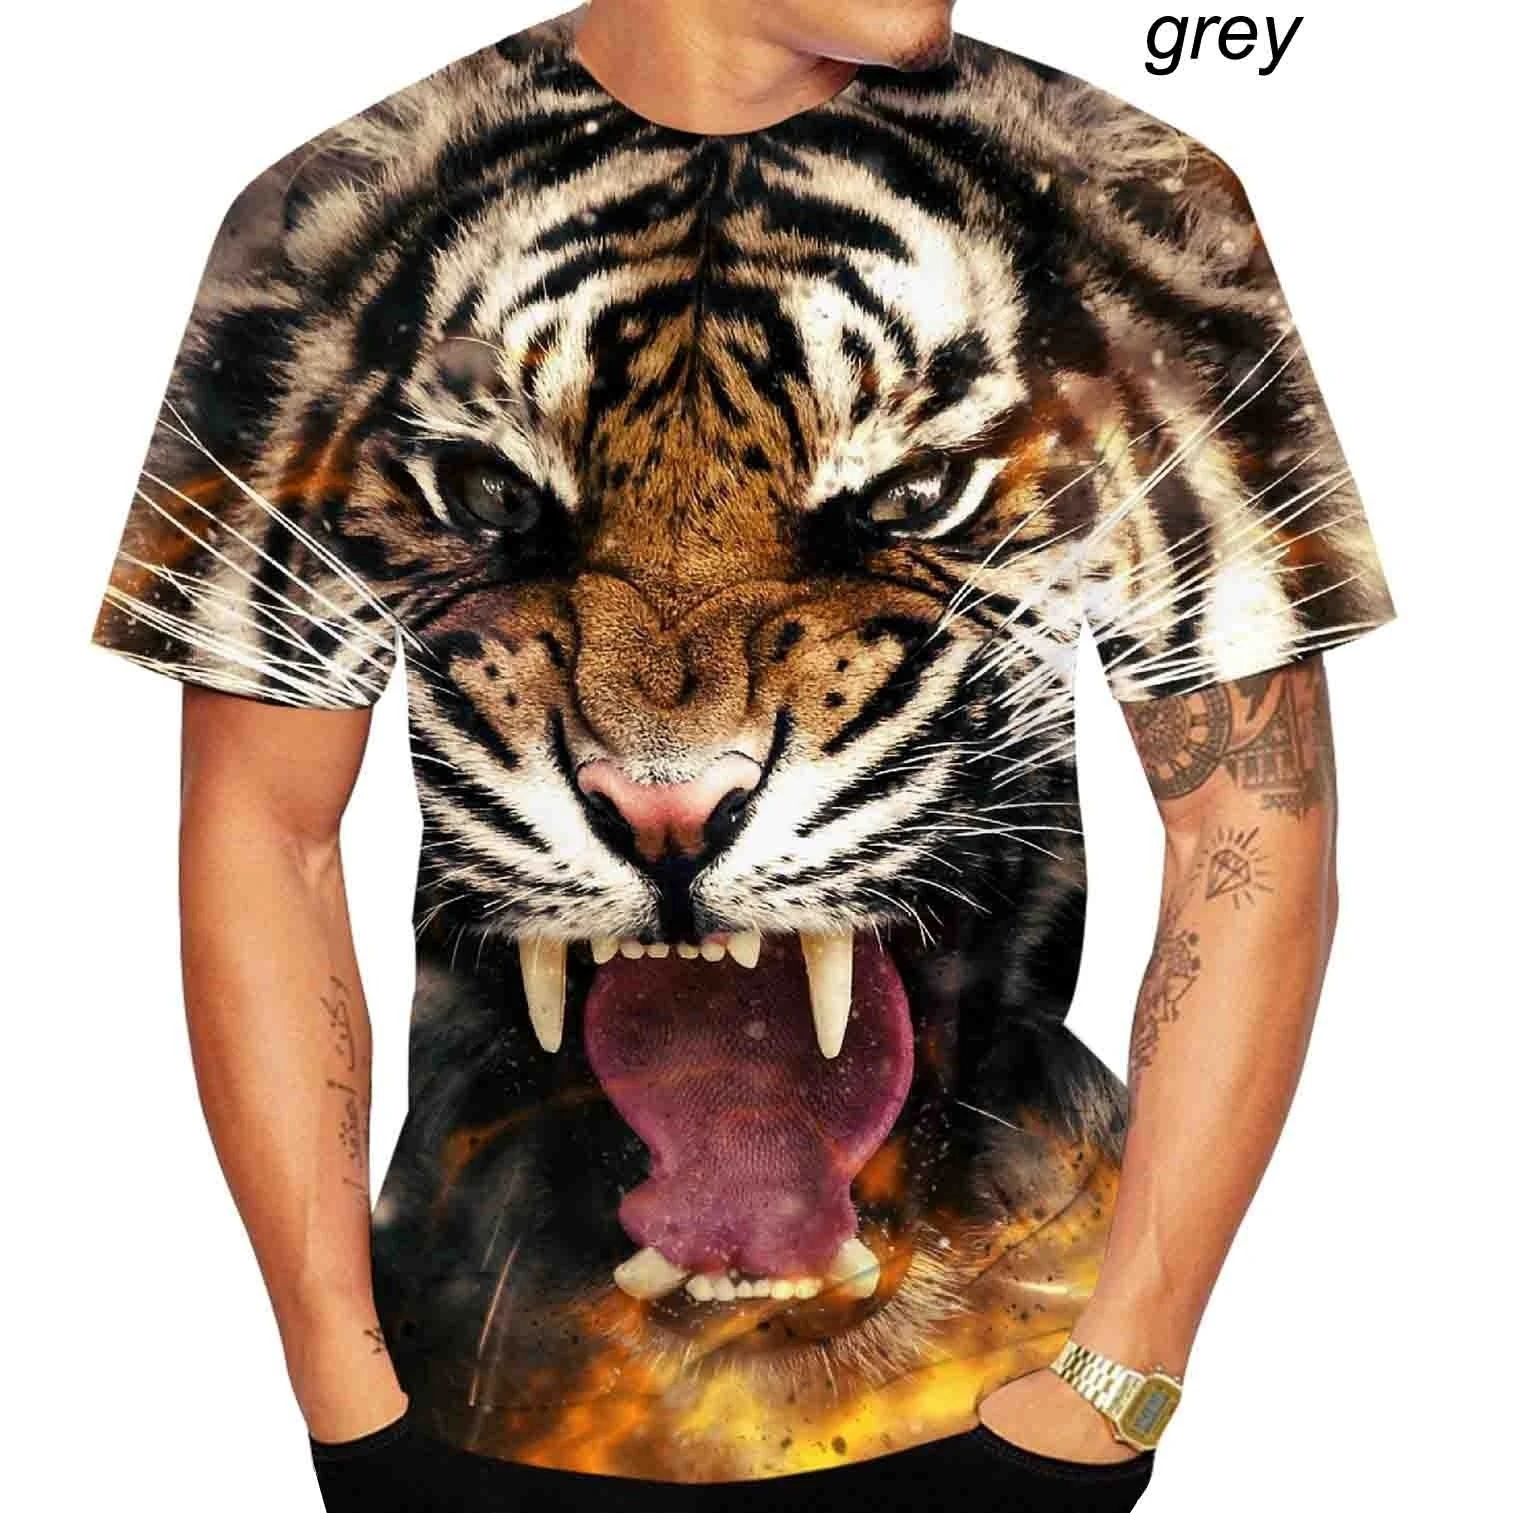 2022 New Fashion Summer 3D Print Fire Lion Fashion T Shirt for Men Short Sleeves Casual Round Neck T Shirt black tee shirt